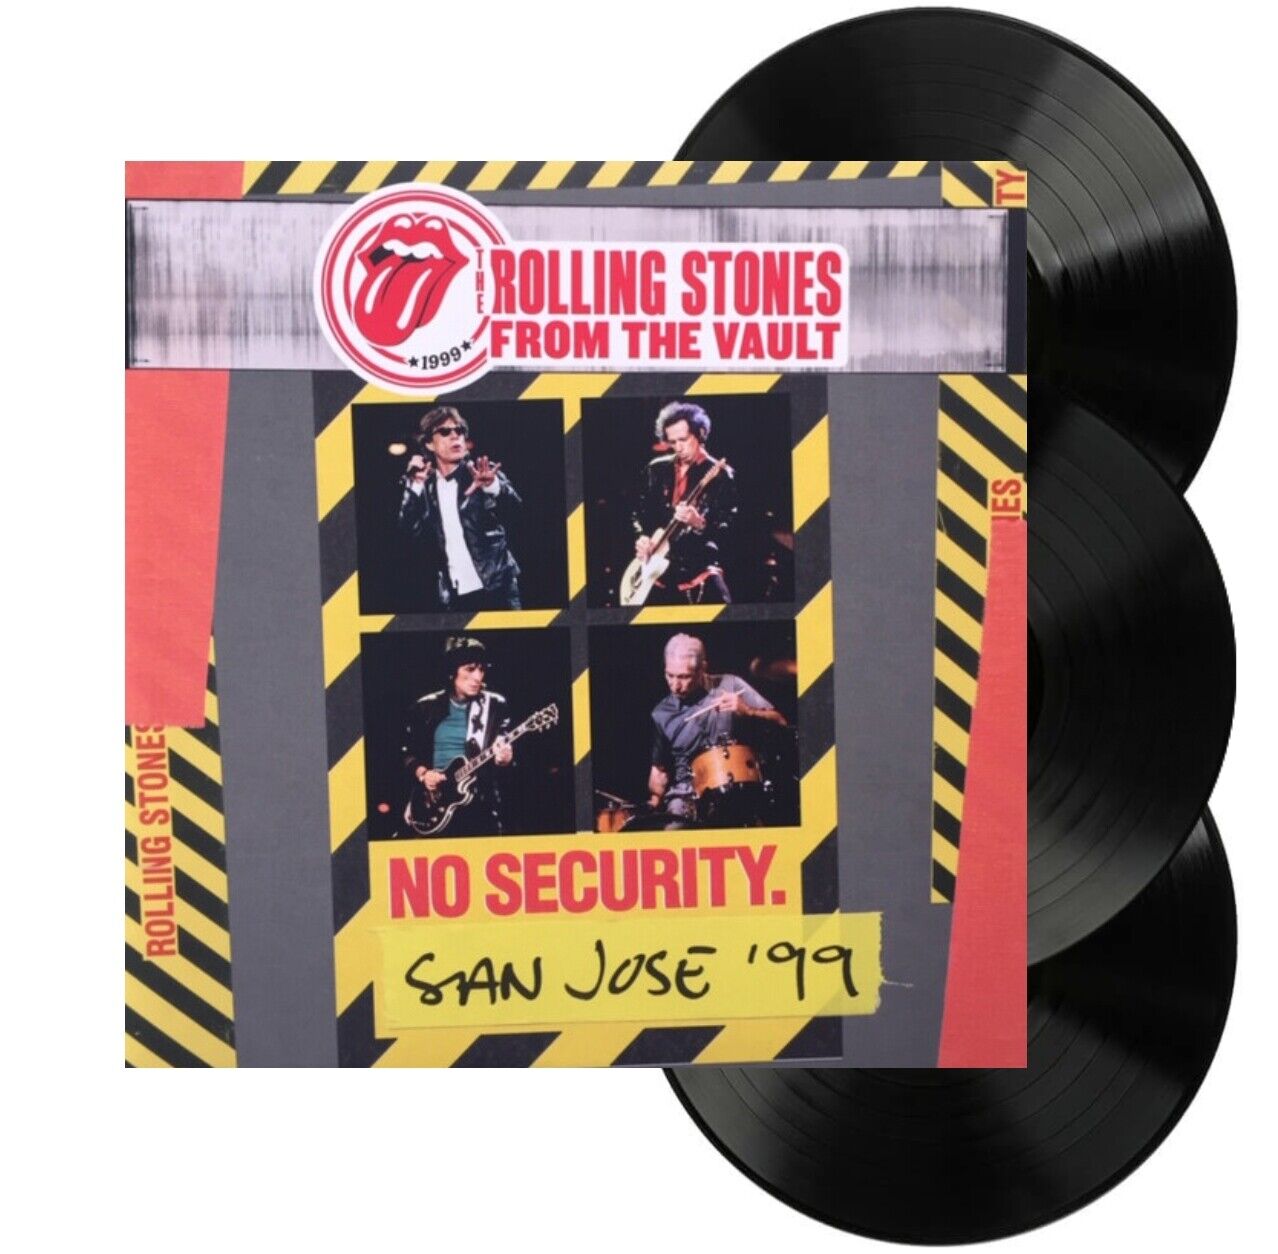 The Rolling Stones: No Security. San Jose '99 Triple LP Vinyl New Sealed